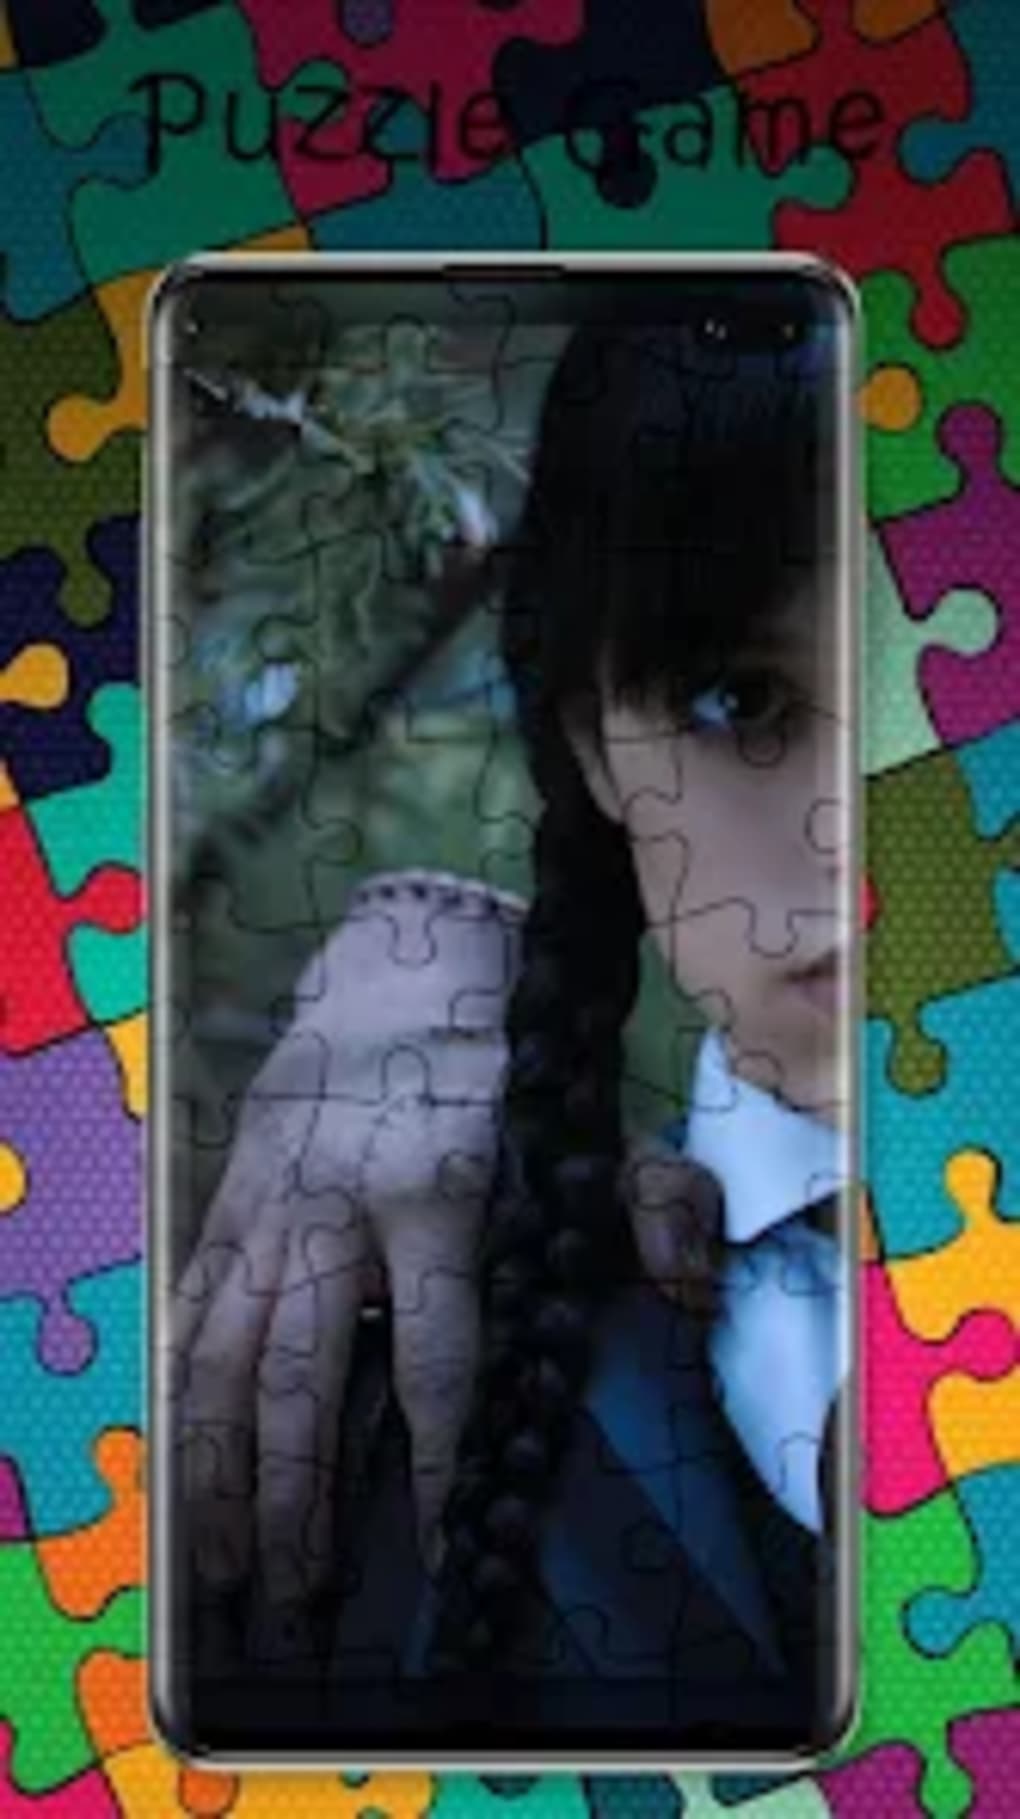 Wednesday Addams Jigsaw Puzzle  Play free online games, Jigsaw